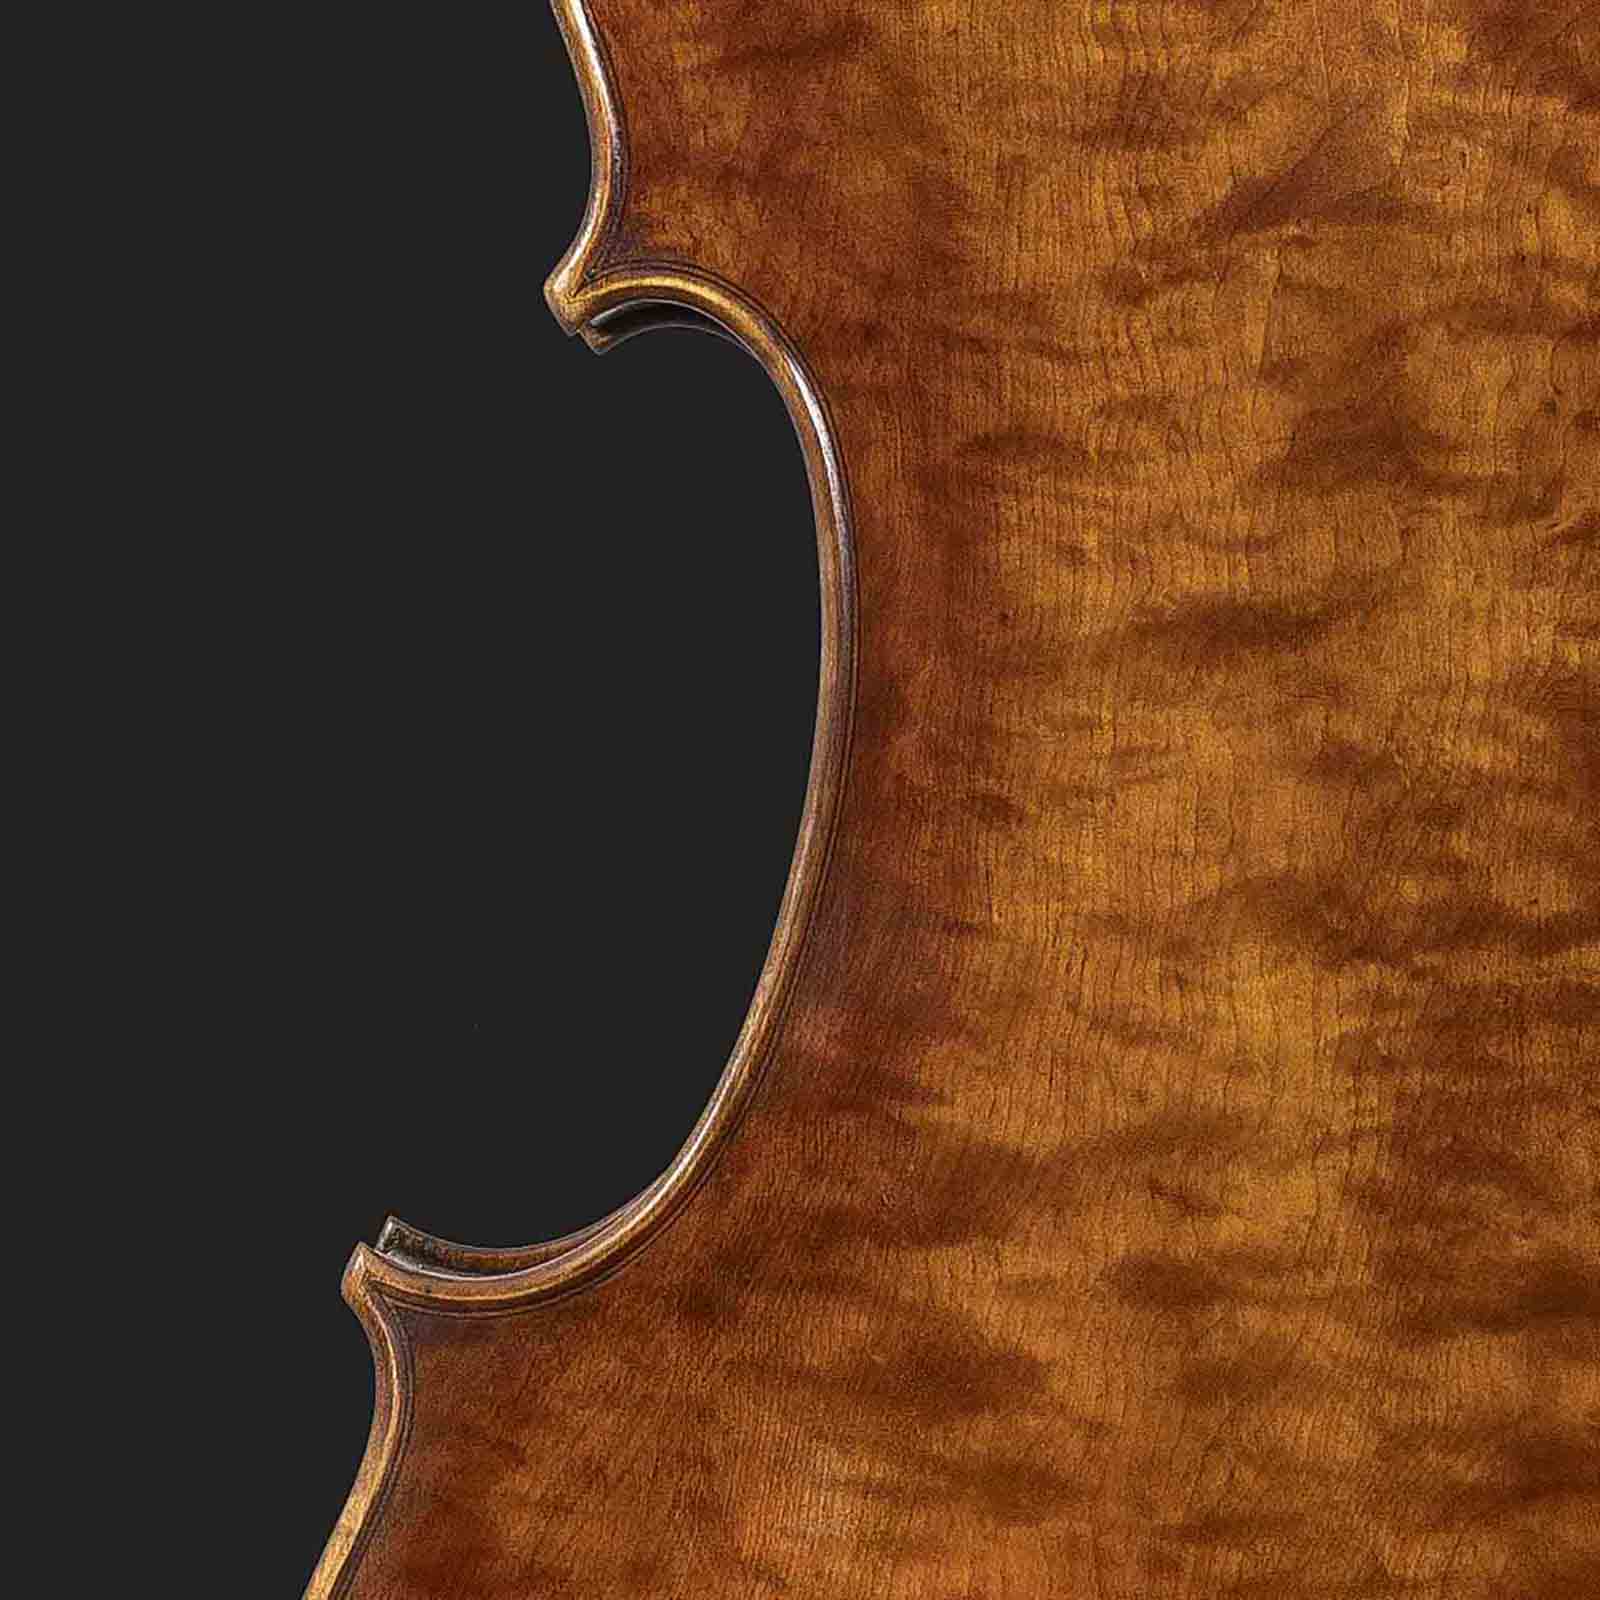 Antonio Stradivari Cremona 1730 “Cristiani“ “Kyoto“ - Image 4